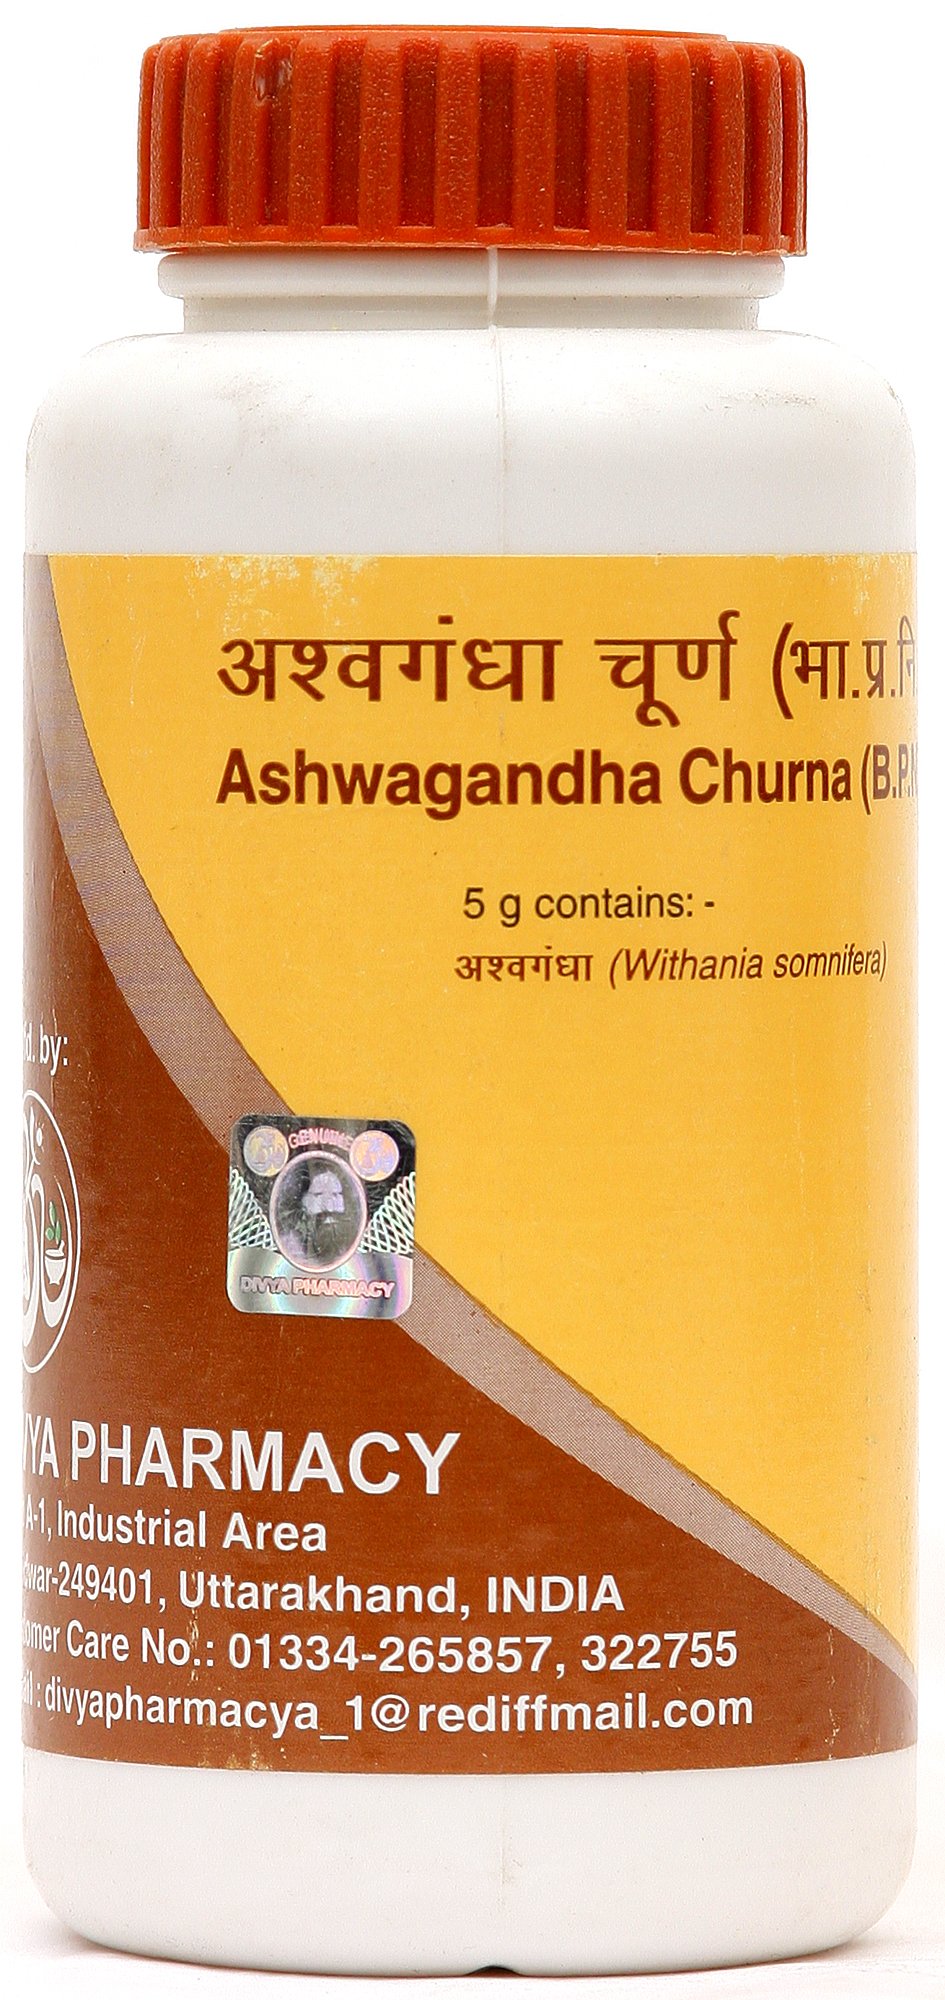 how to take ashwagandha churna for weight loss